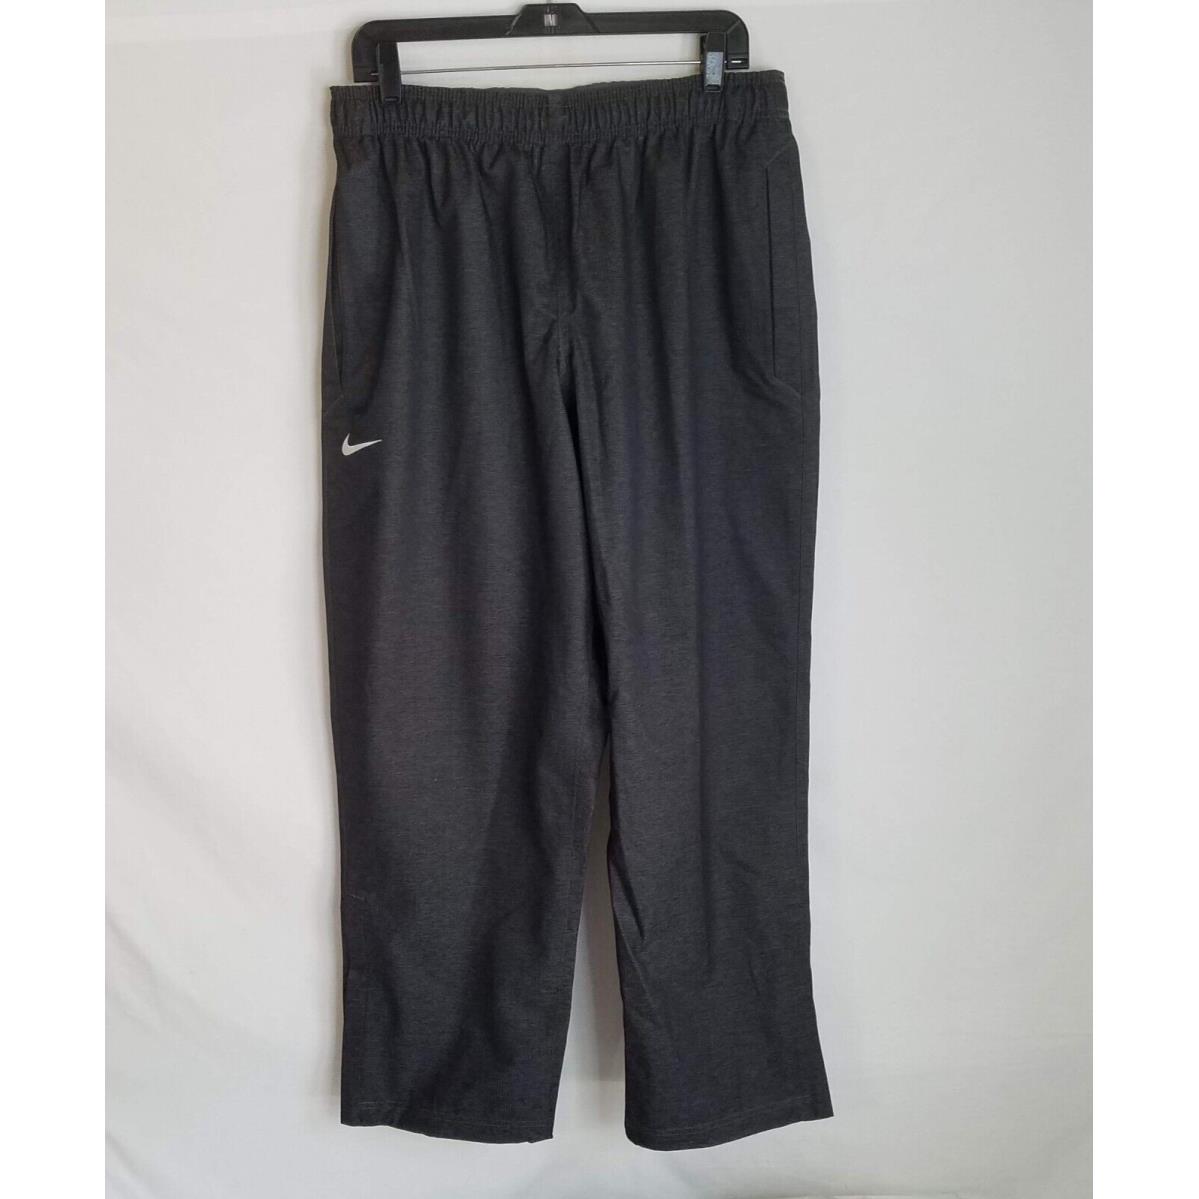 Nike Storm Fit Waterproof Rain Athletic Golf Pants Size XL